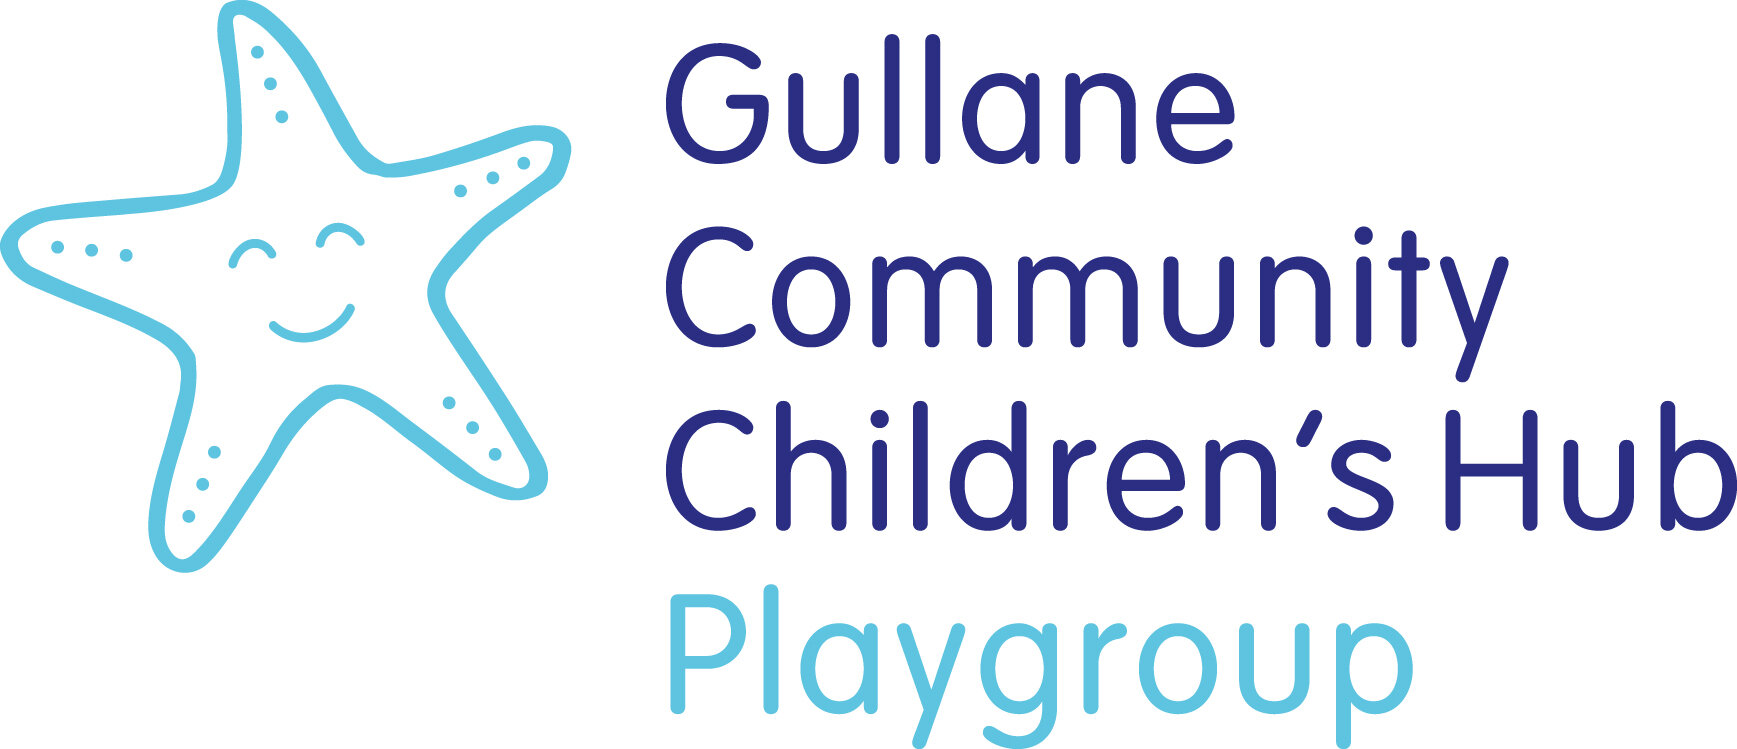 GCCH_Playgroup_Logo_colour.jpg